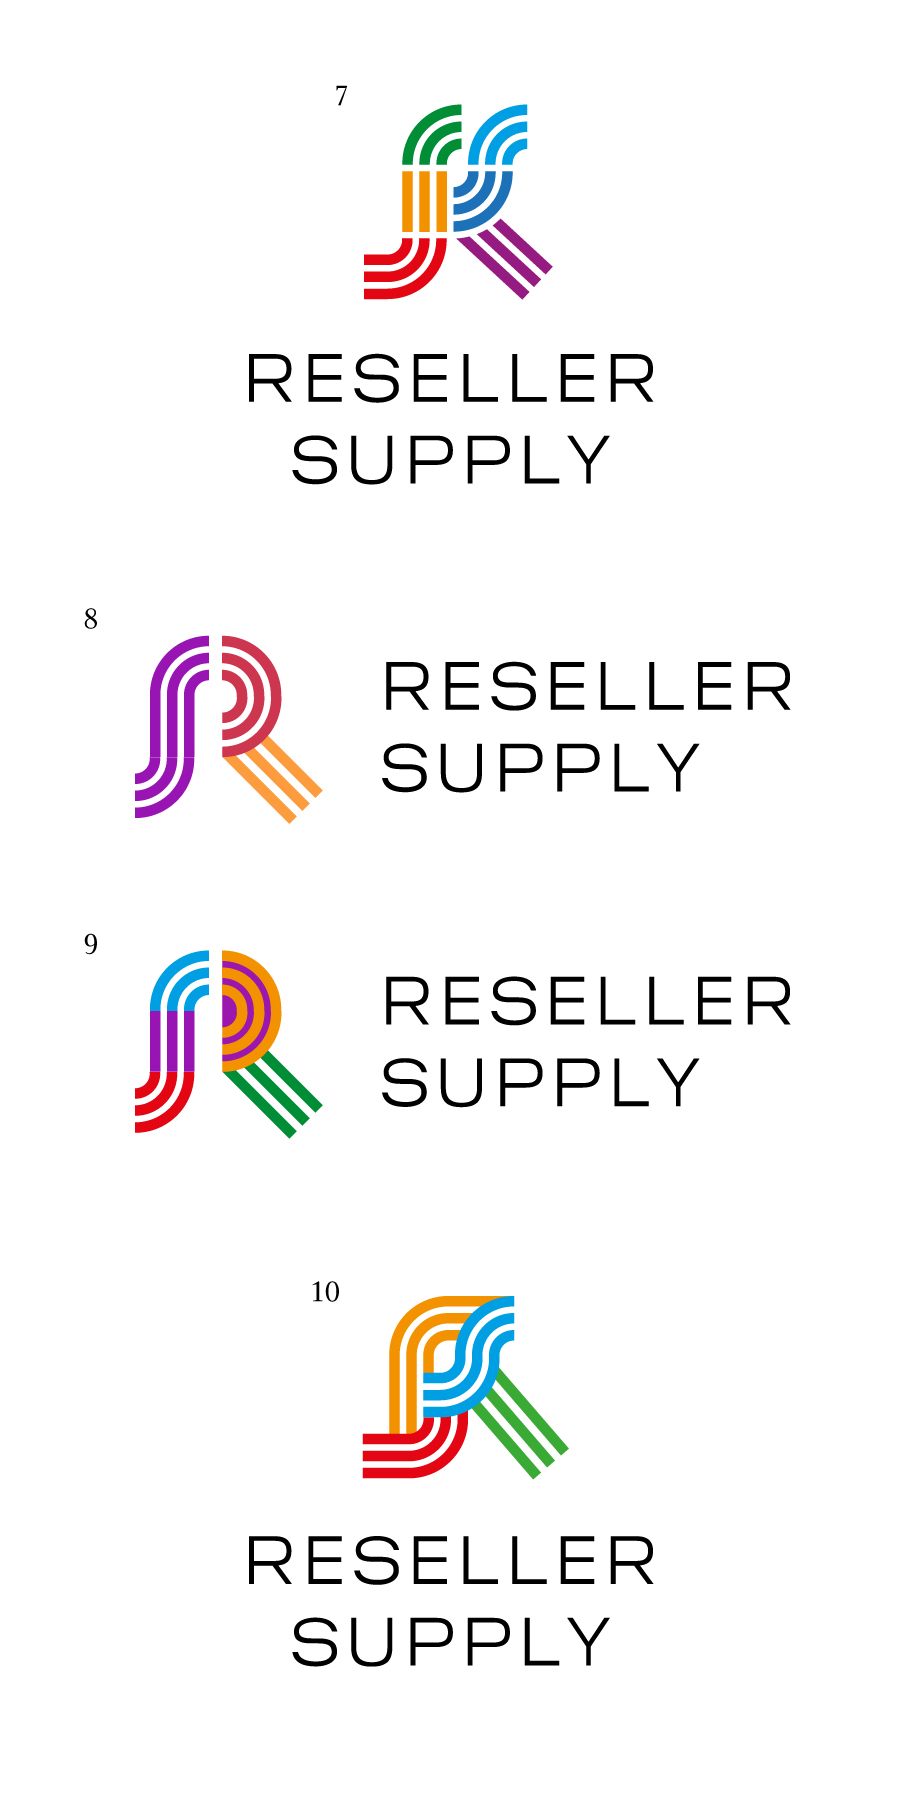 reseller supply process 02